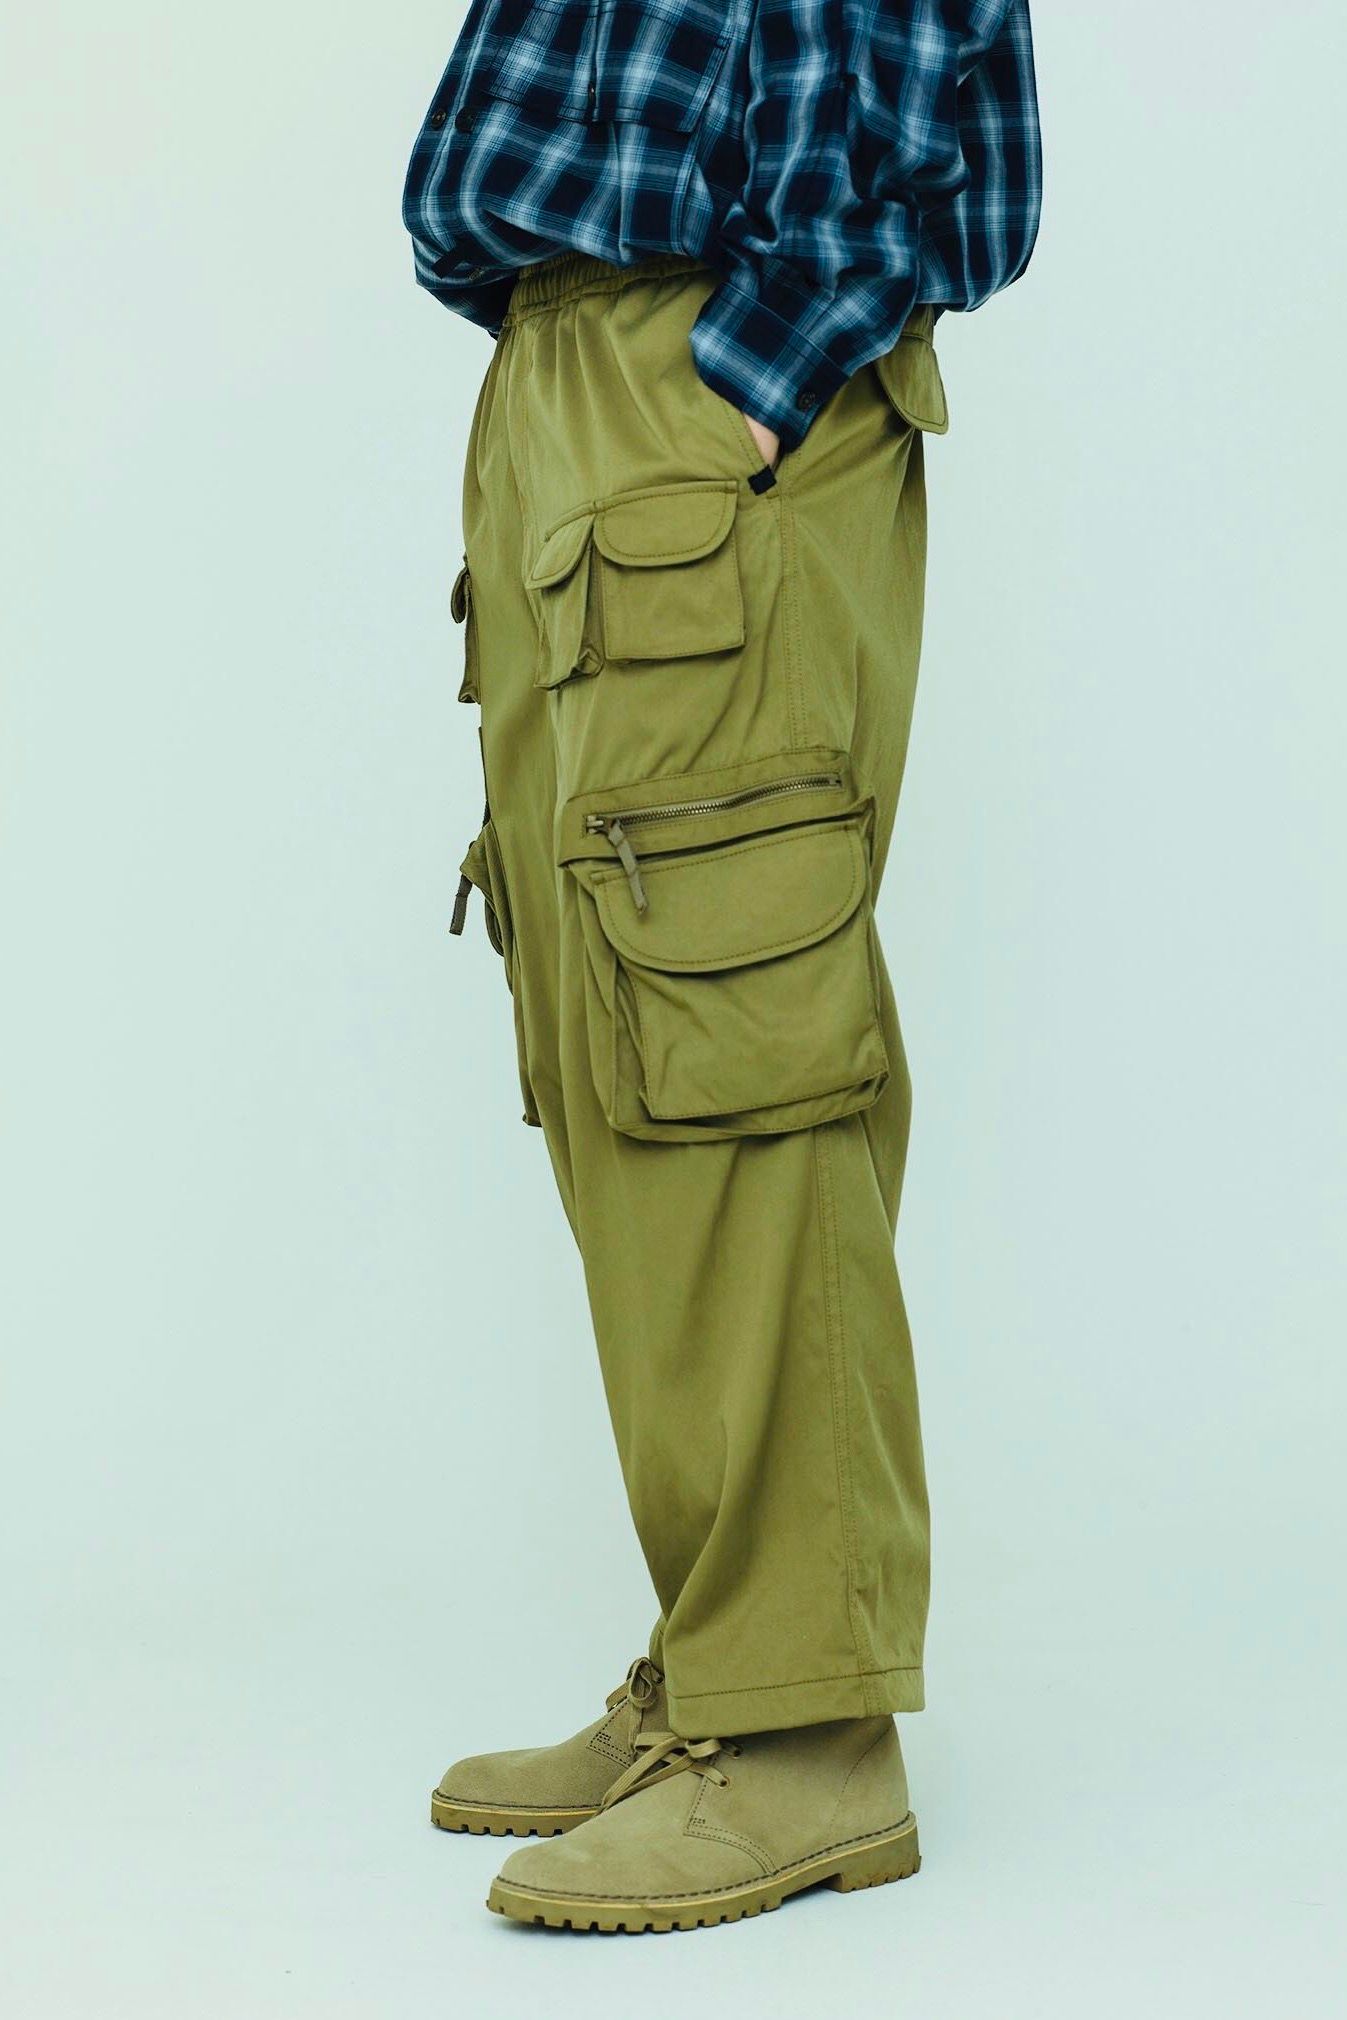 DAIWA PIER39 - tech perfect fishing pants -beige- 22aw men 8月27